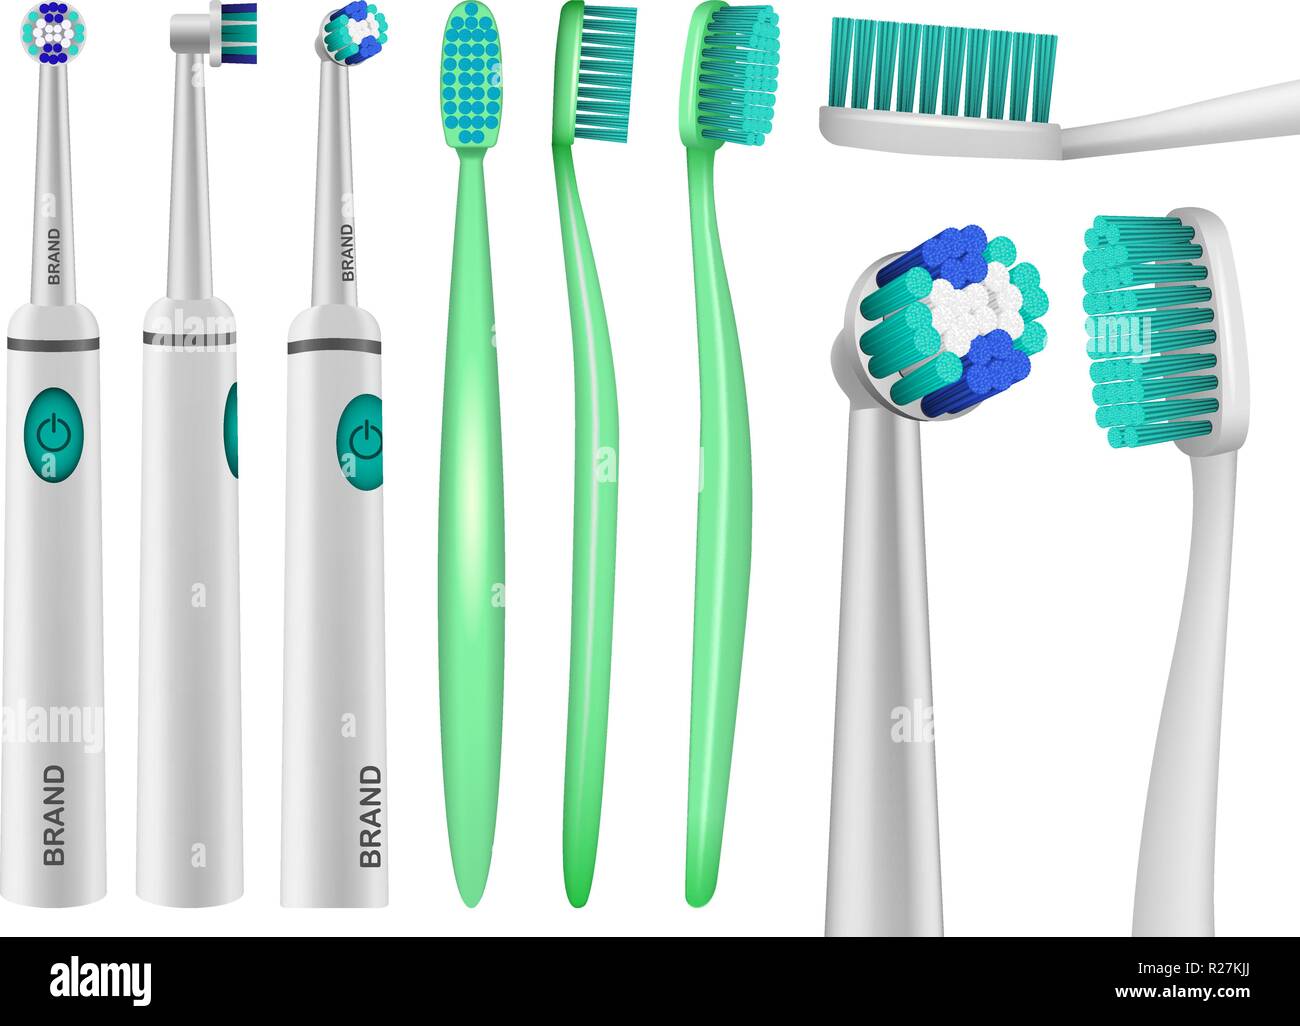 Download Toothbrush Dental Mockup Set Realistic Illustration Of 9 Toothbrush Dental Mockups For Web Stock Vector Image Art Alamy